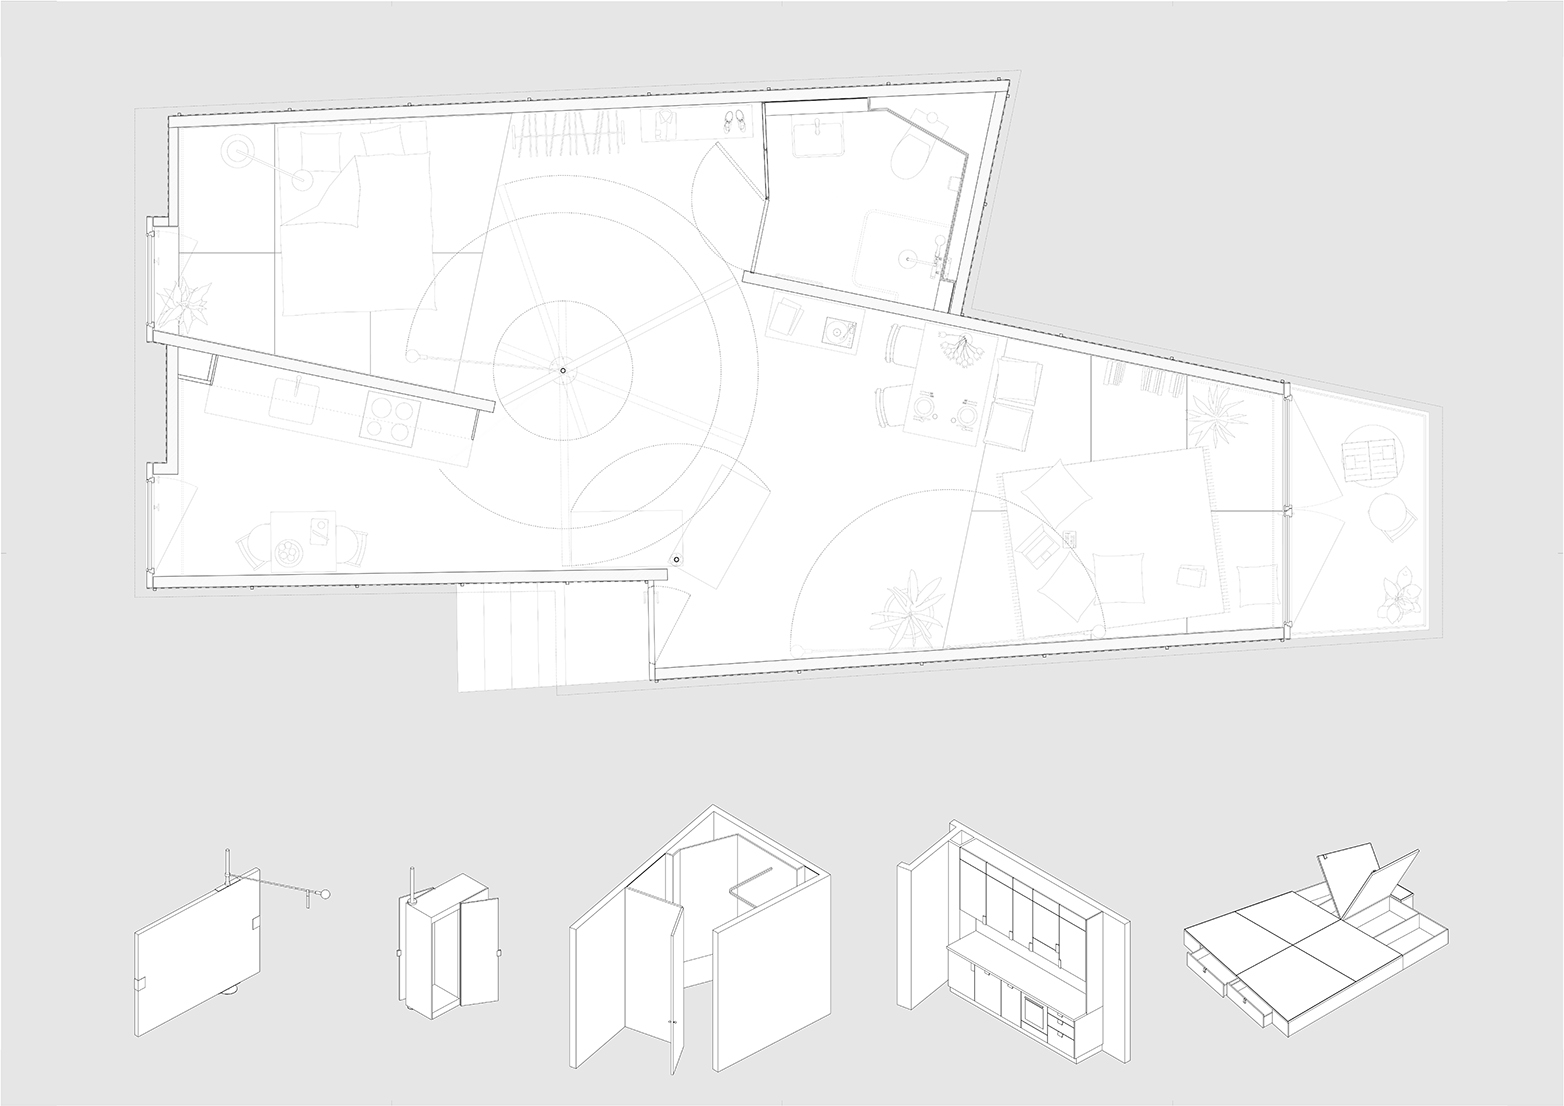 Enlarged view: The floor plan.